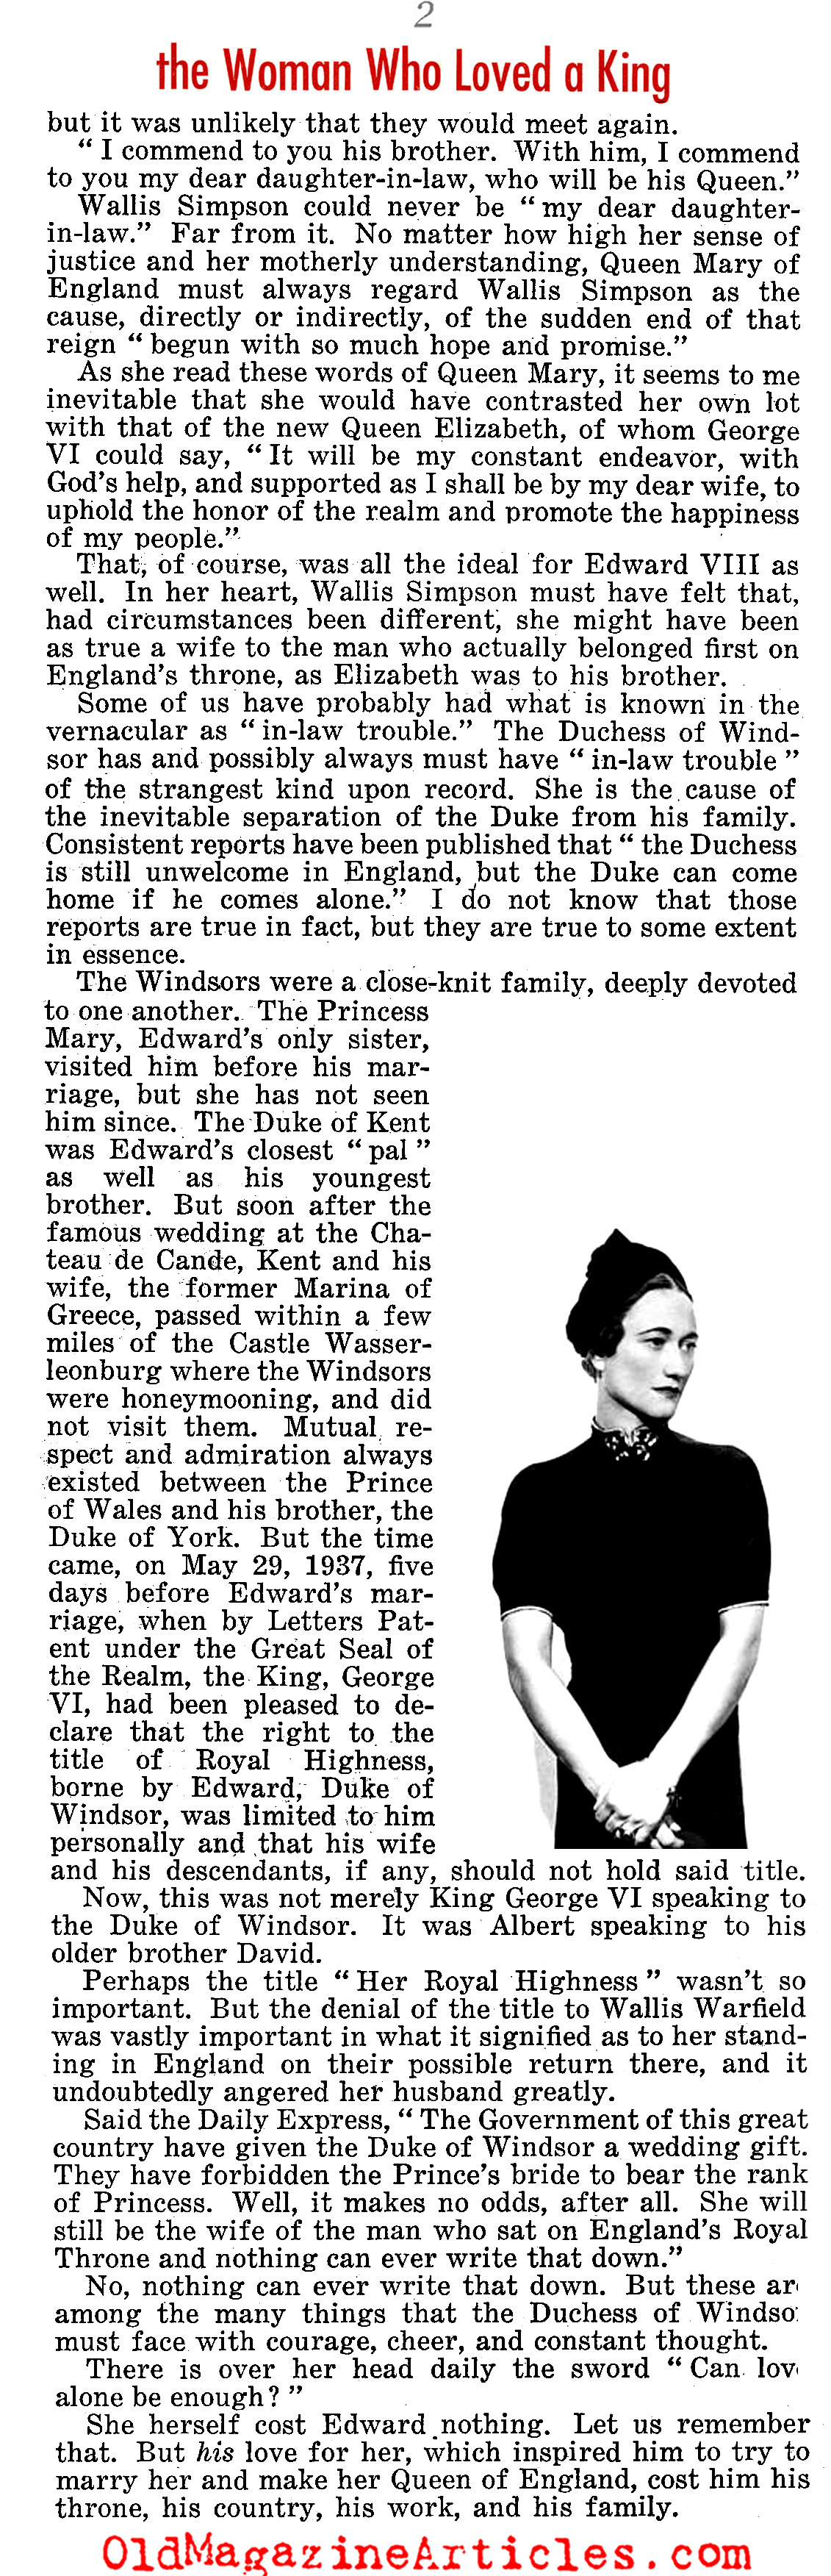 The Duchess and her New Life (Liberty Magazine, 1938)